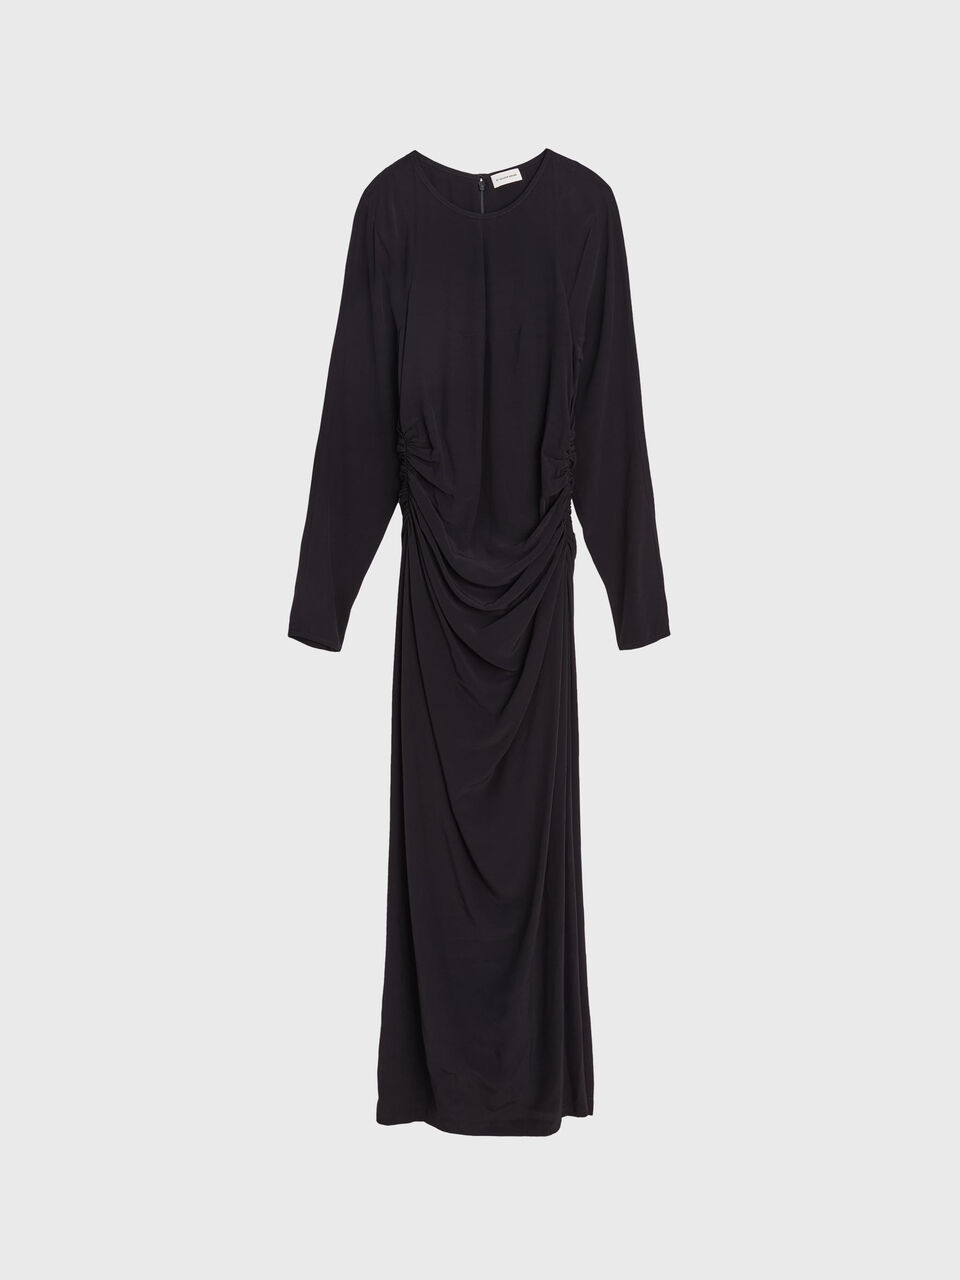 Ellasso dress - Buy Dresses online